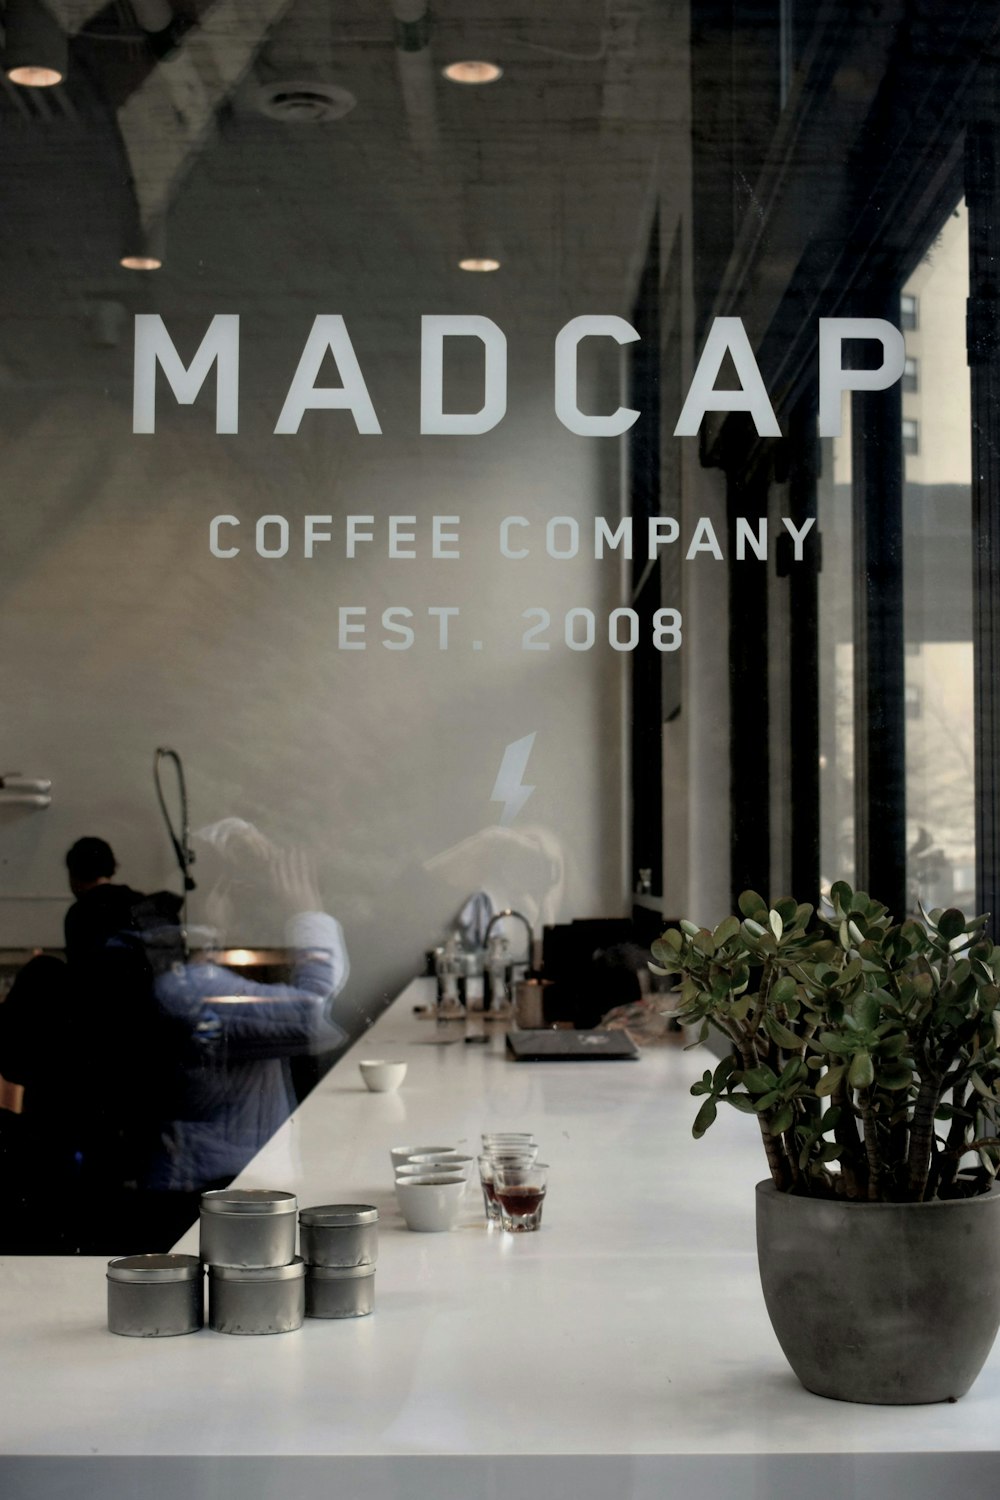 Madcap signage